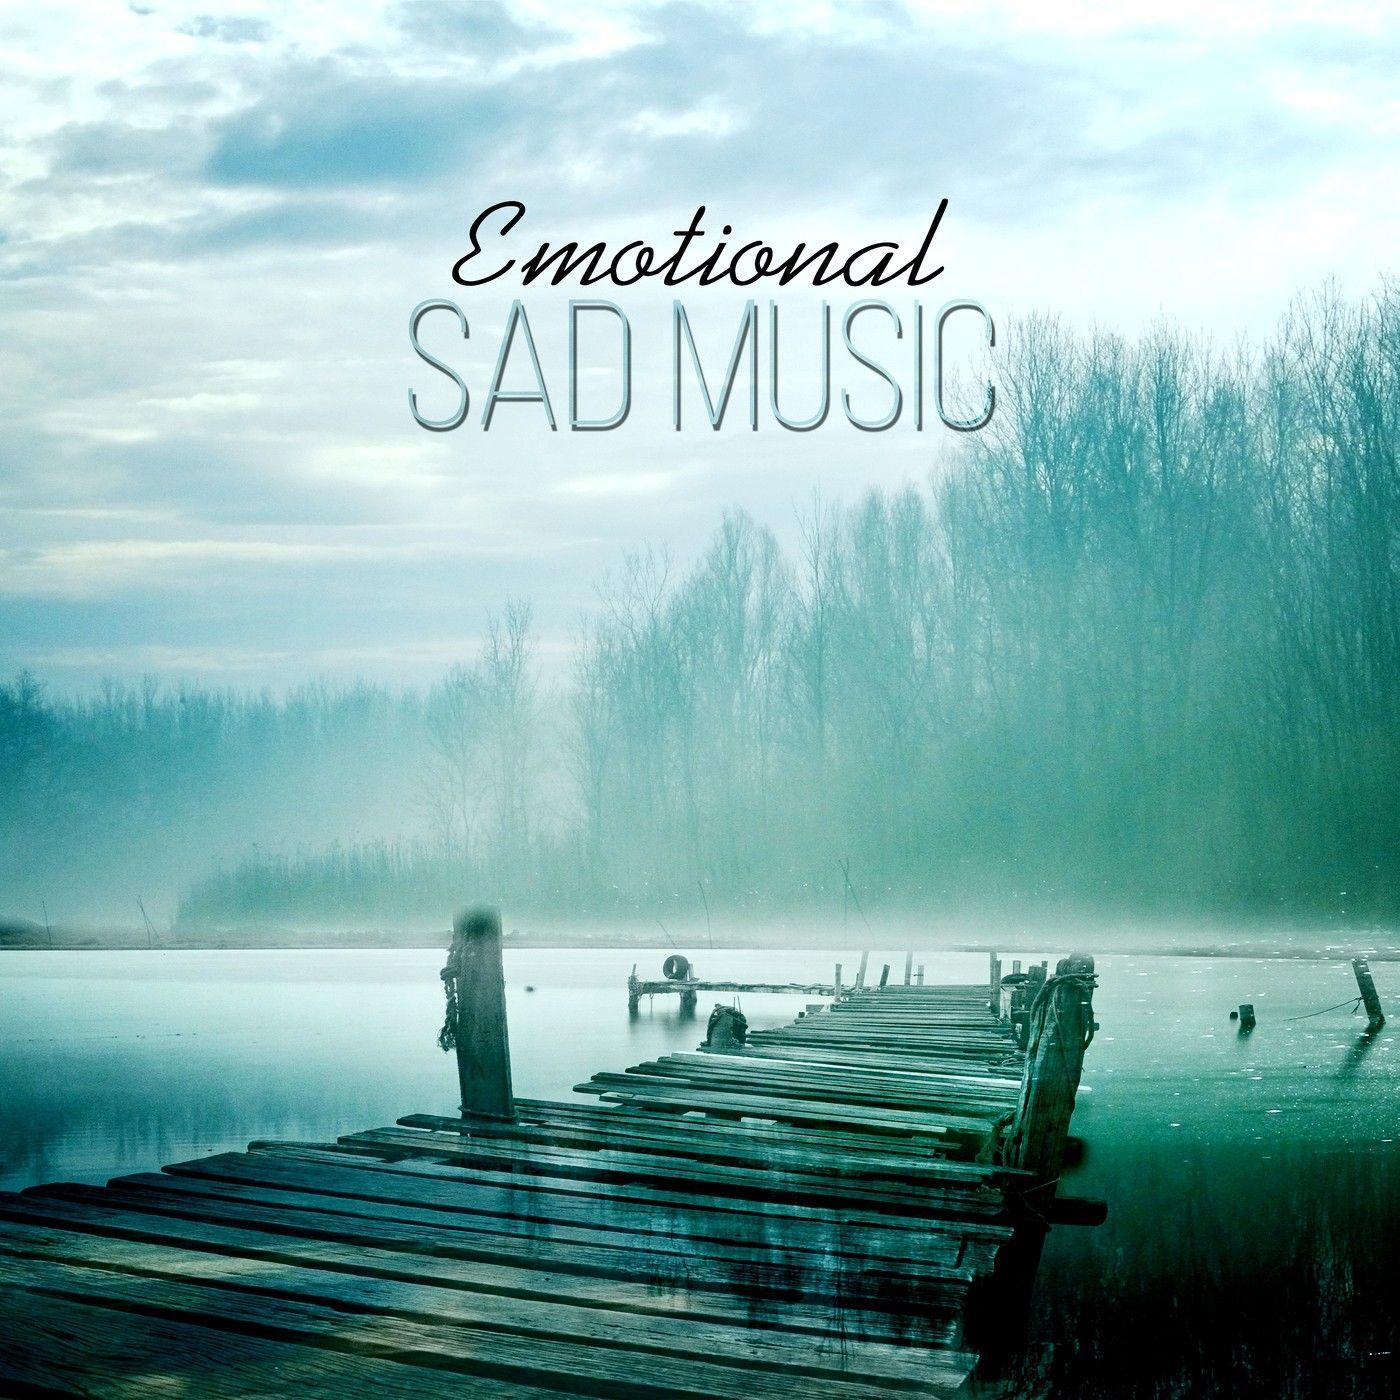 Emotional Sad Music